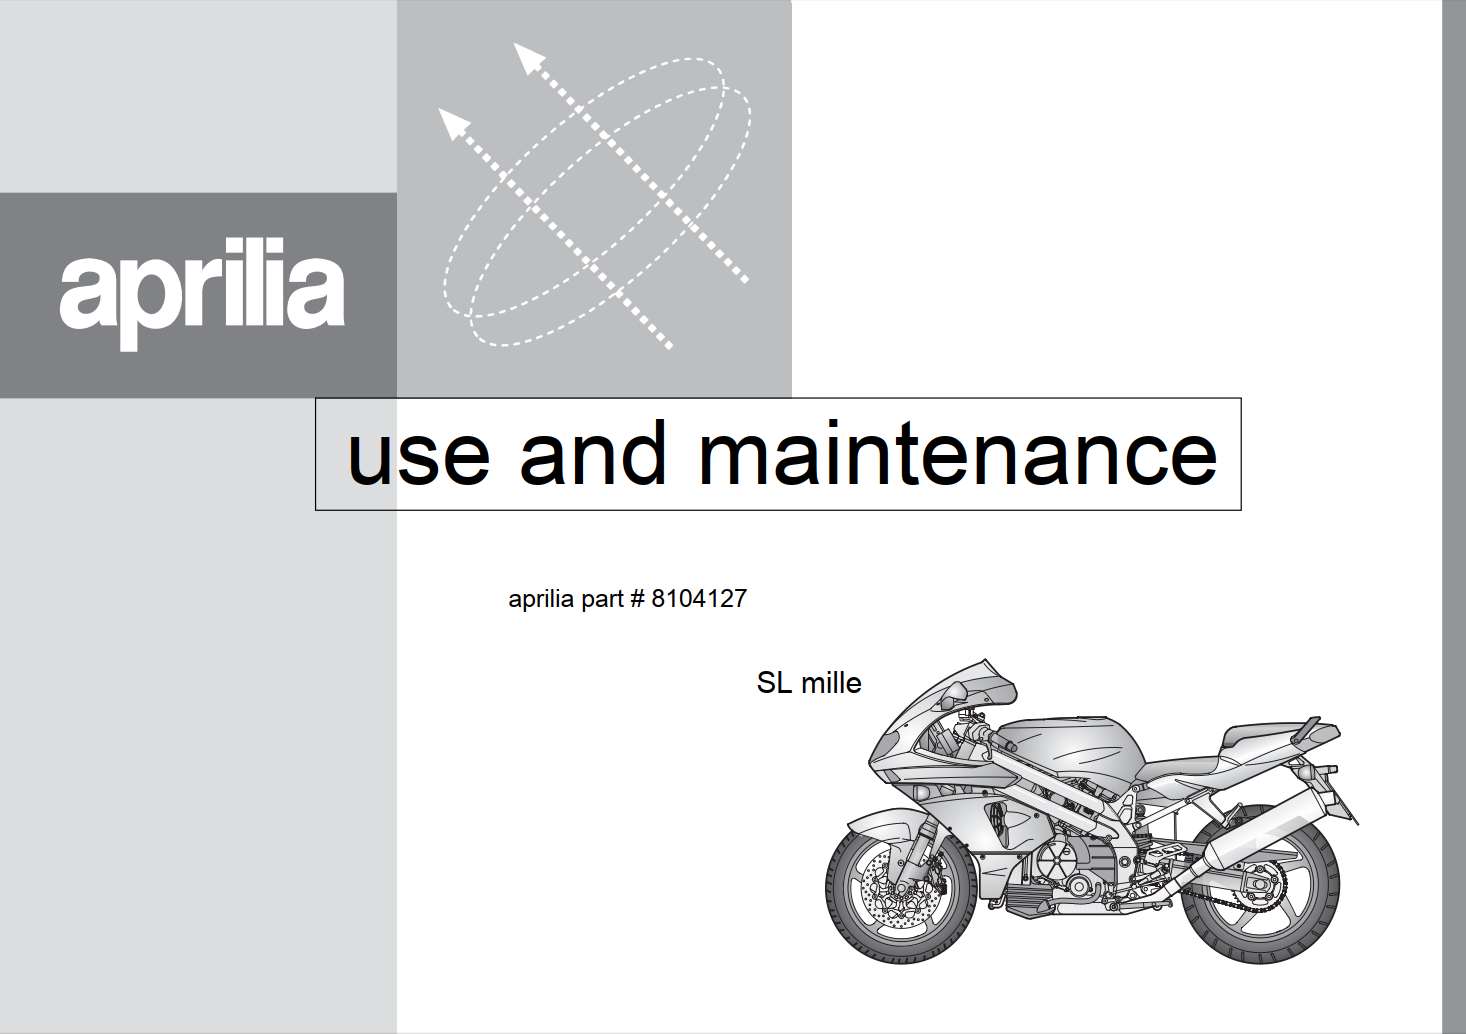 Мото-мануал по ремонту и обслуживанию мотоцикла Априлия RSV Mille.